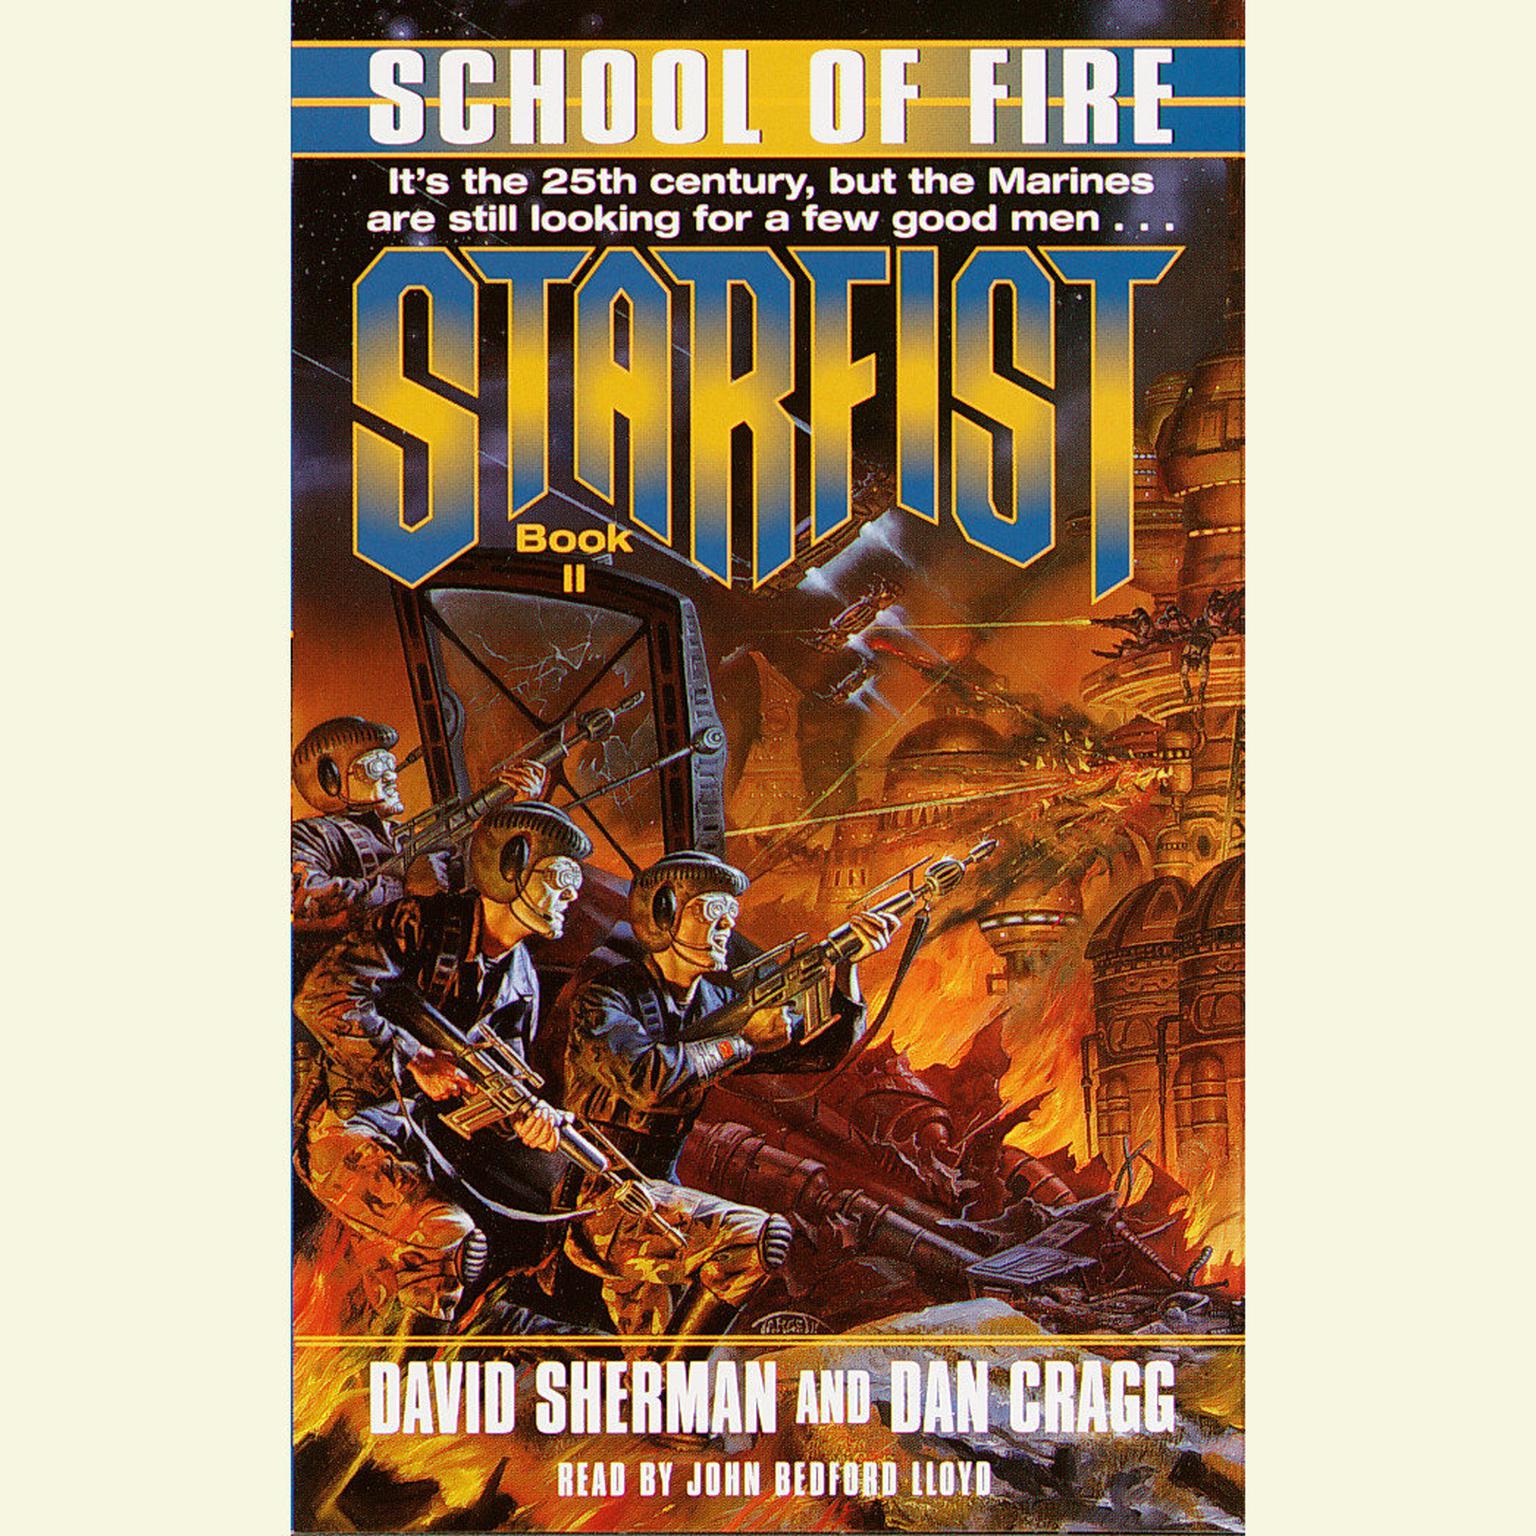 Starfist: School of Fire (Abridged) Audiobook, by David Sherman